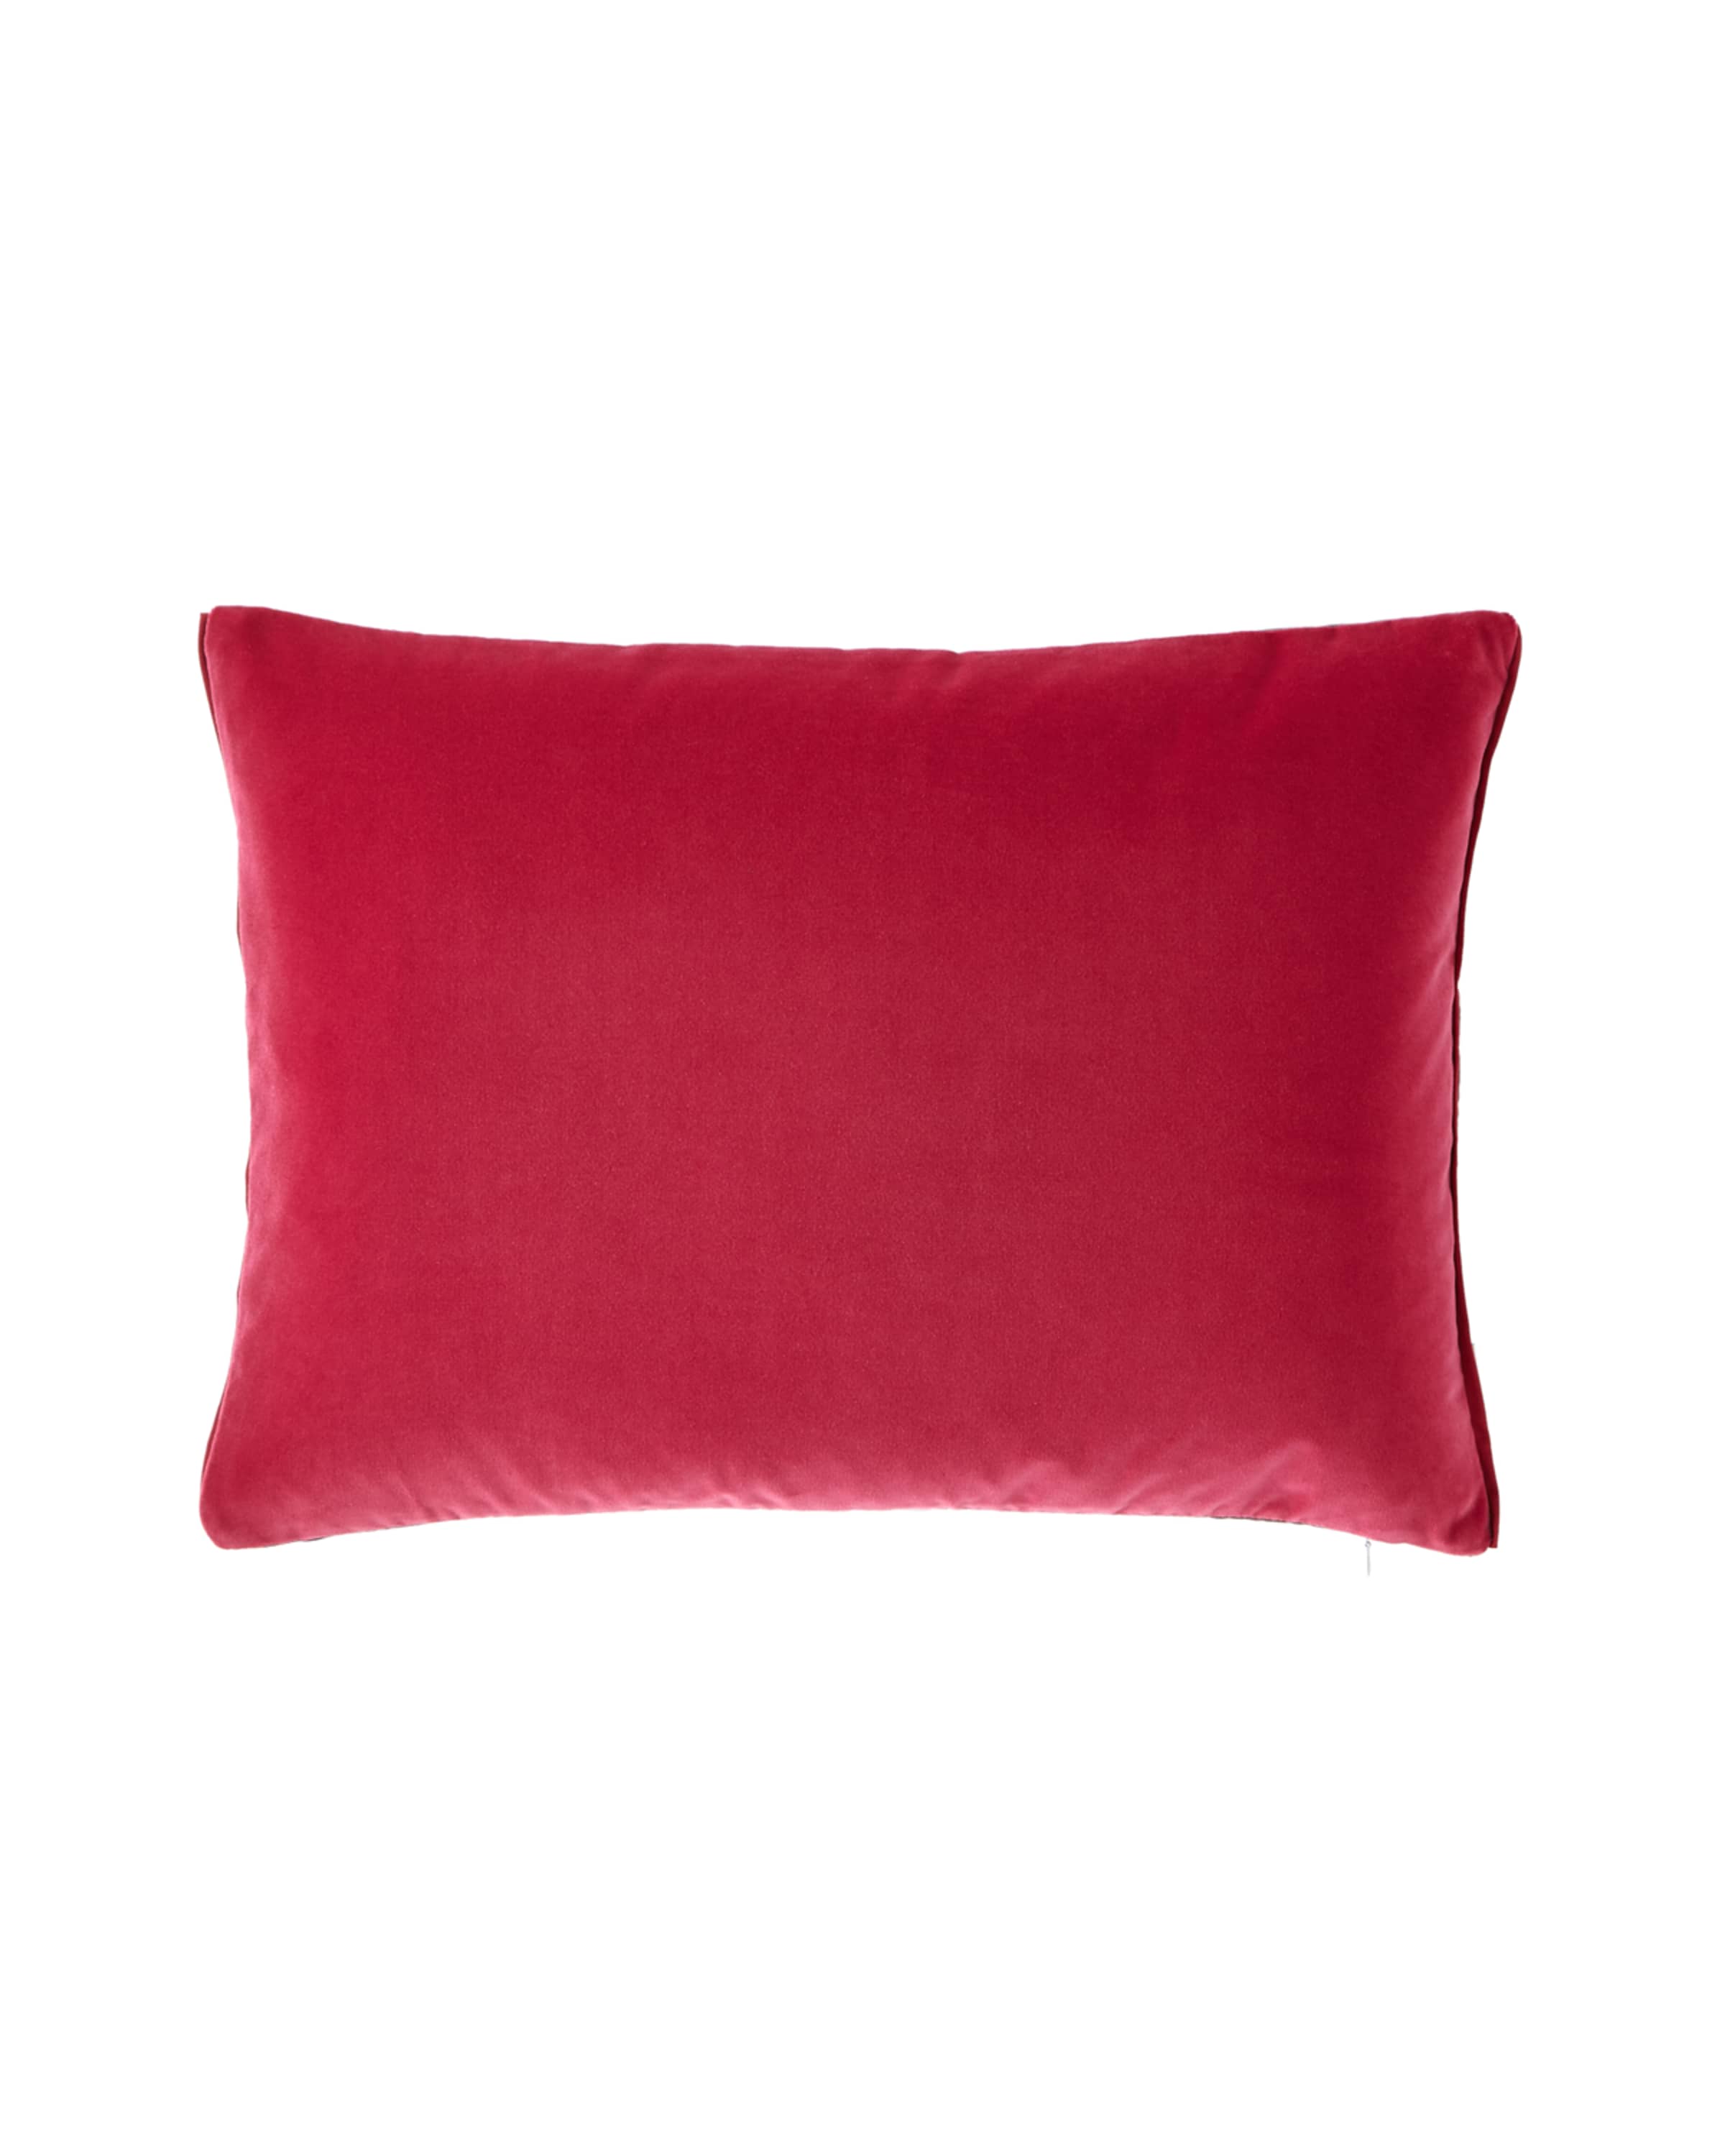 Designers Guild Cassia Fuchsia Pillow